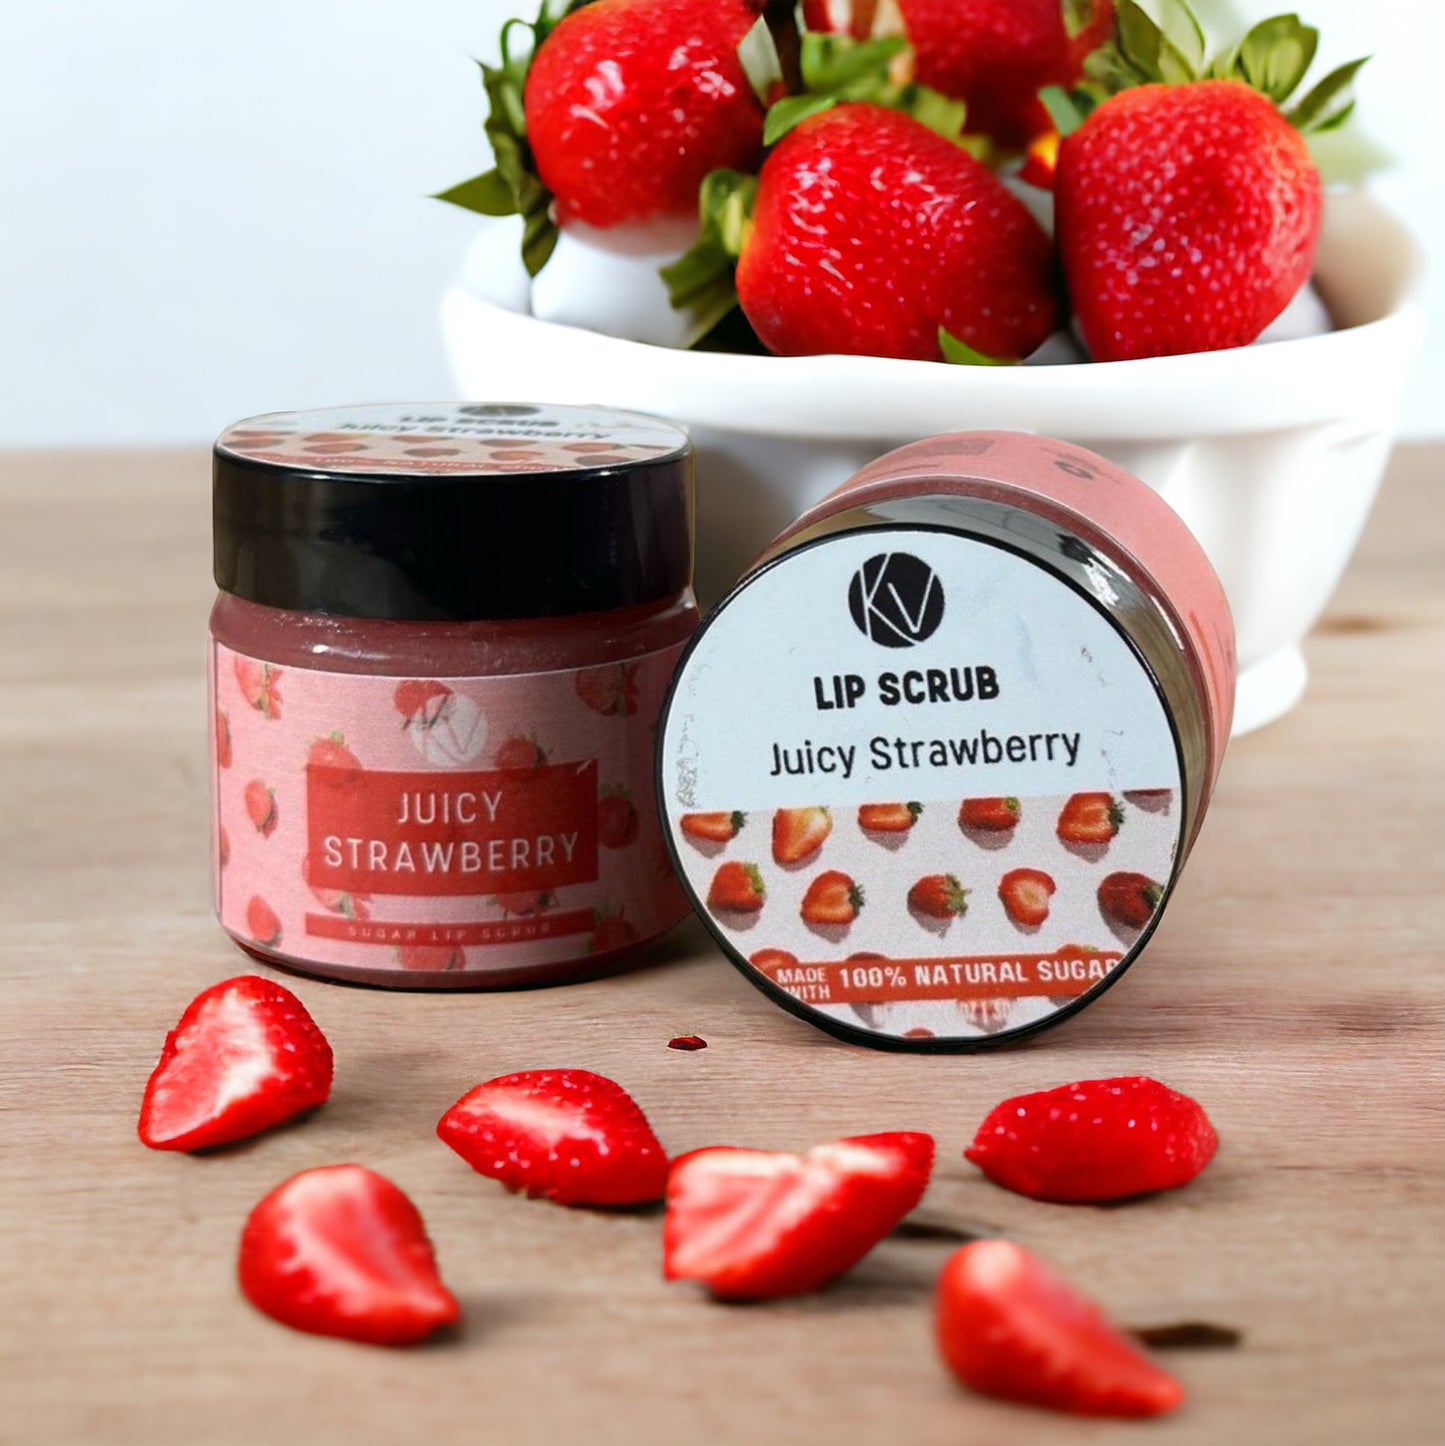 Vegan Moisturizing Lip Scrub with shea butter and jojoba oil- Juicy Strawberry